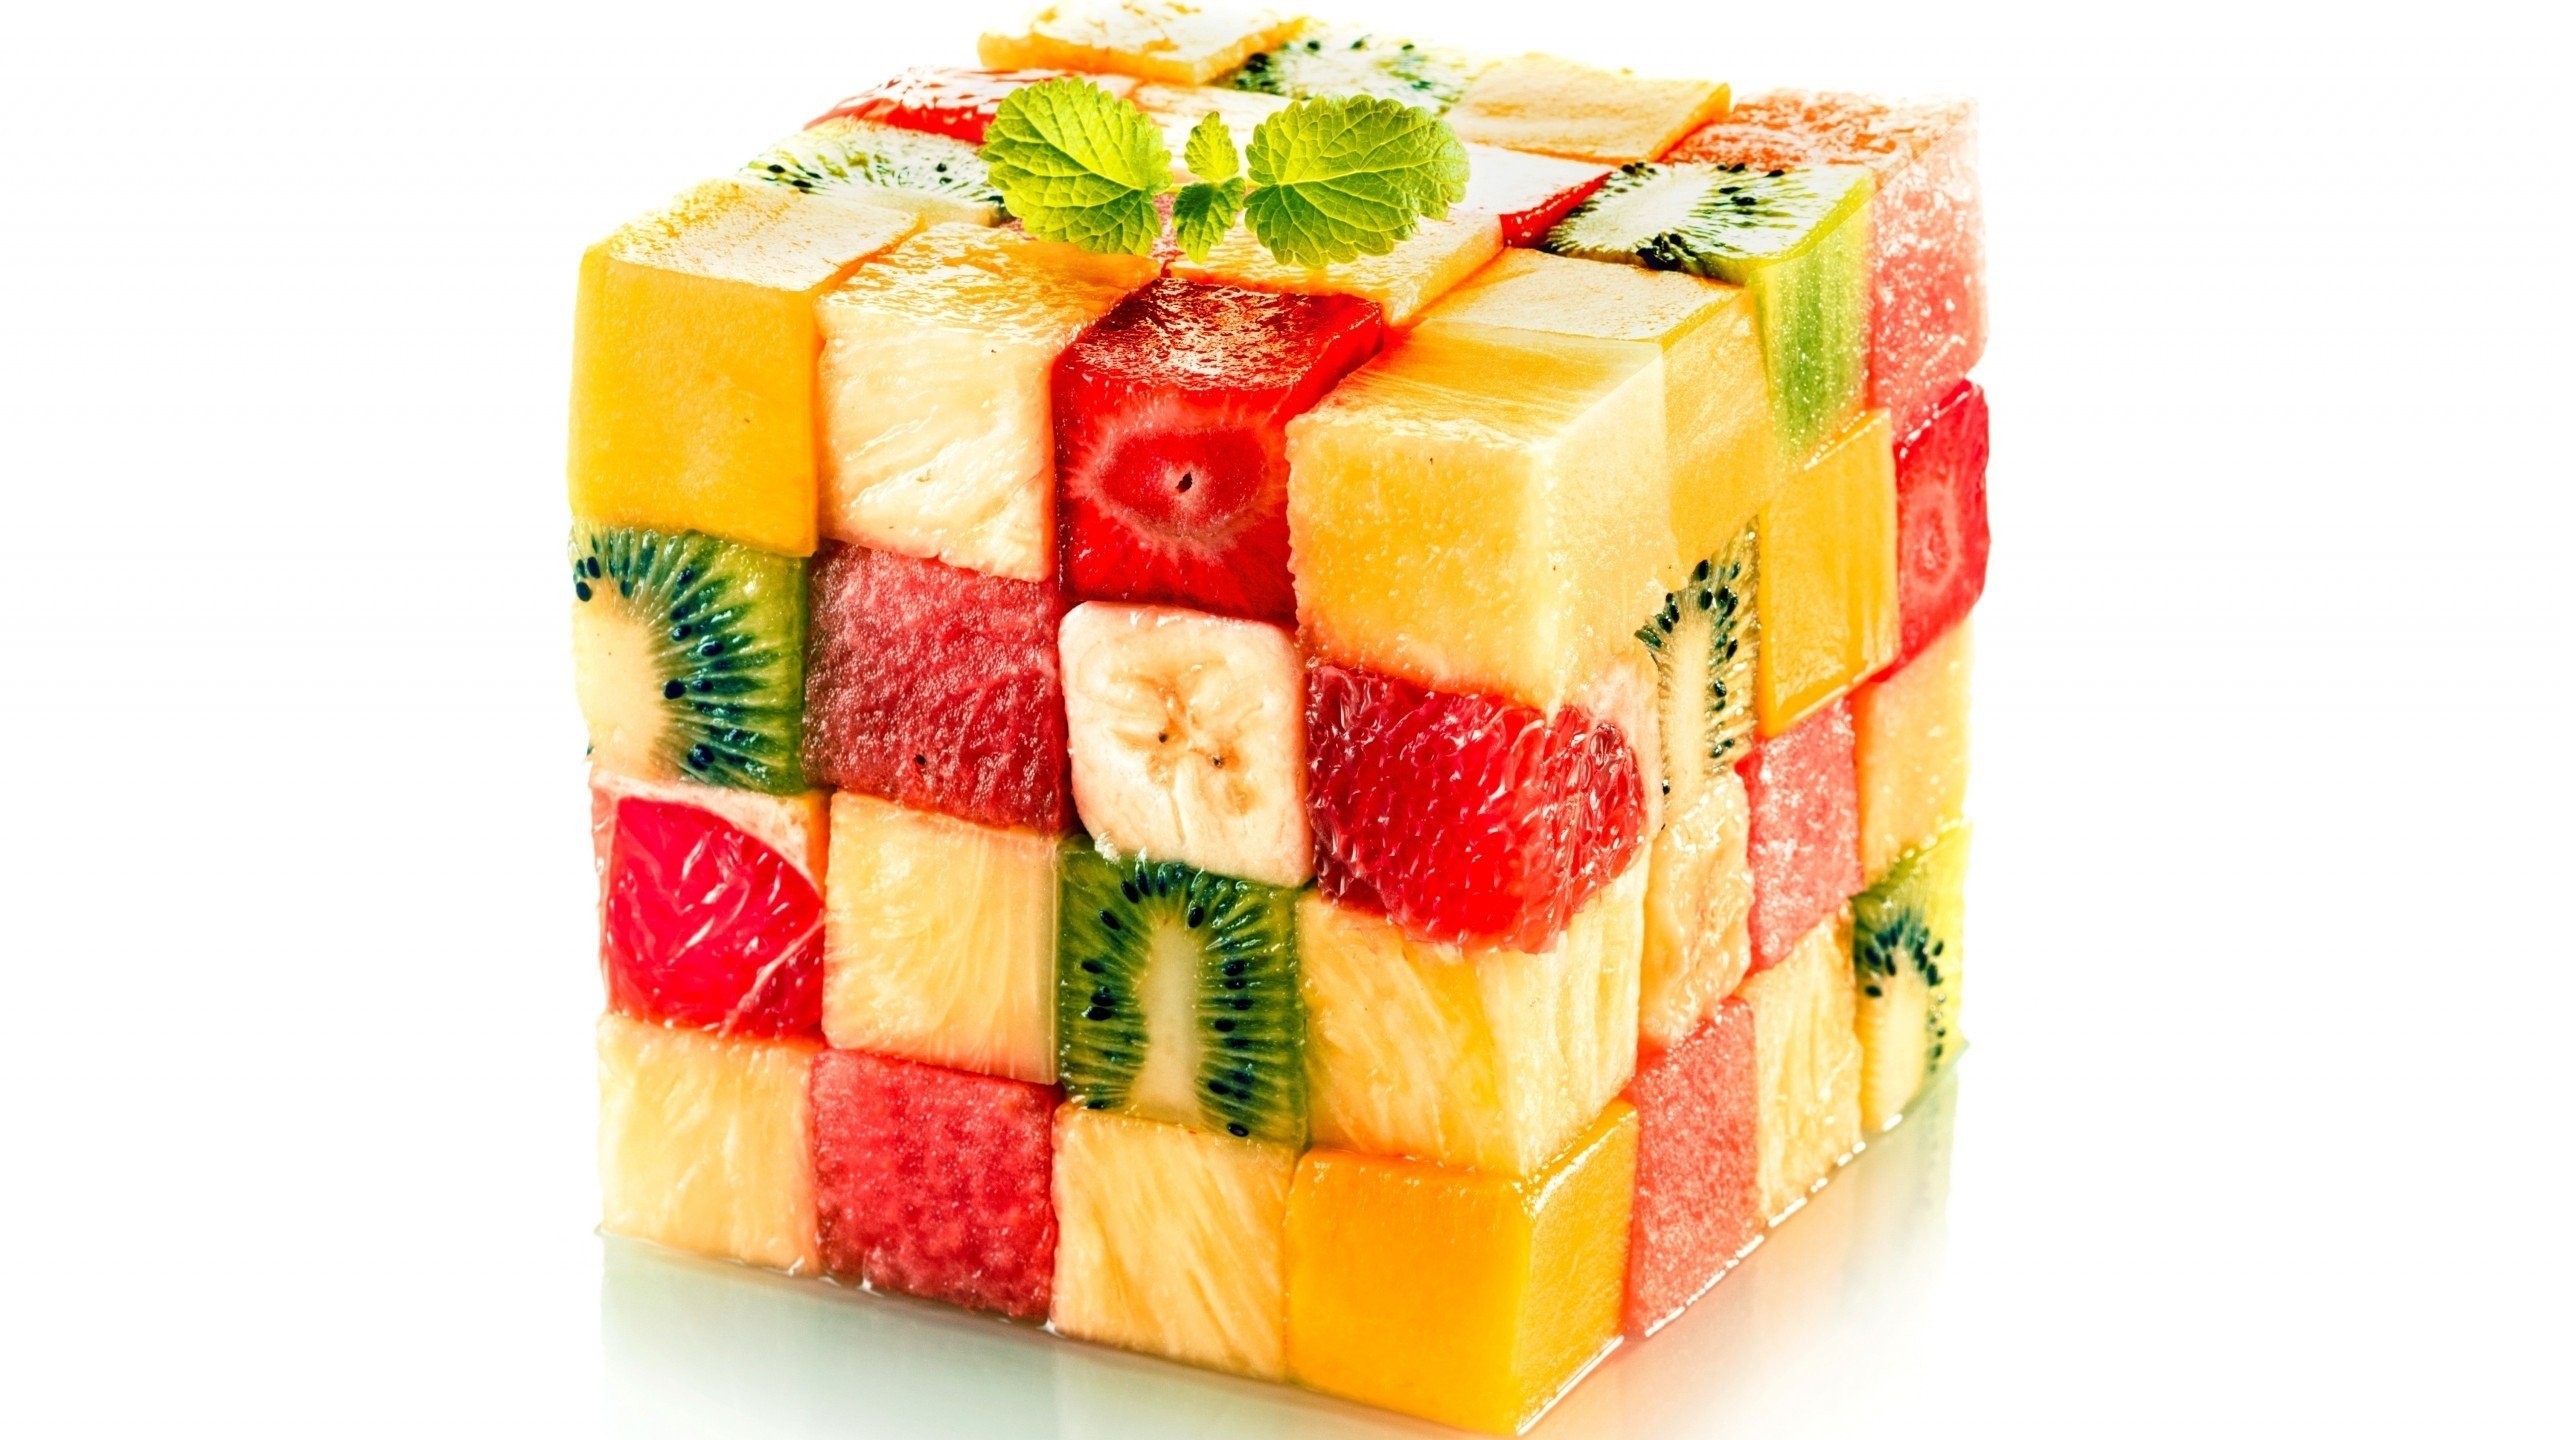 Fruit Salad Cube for 2560x1440 HDTV resolution